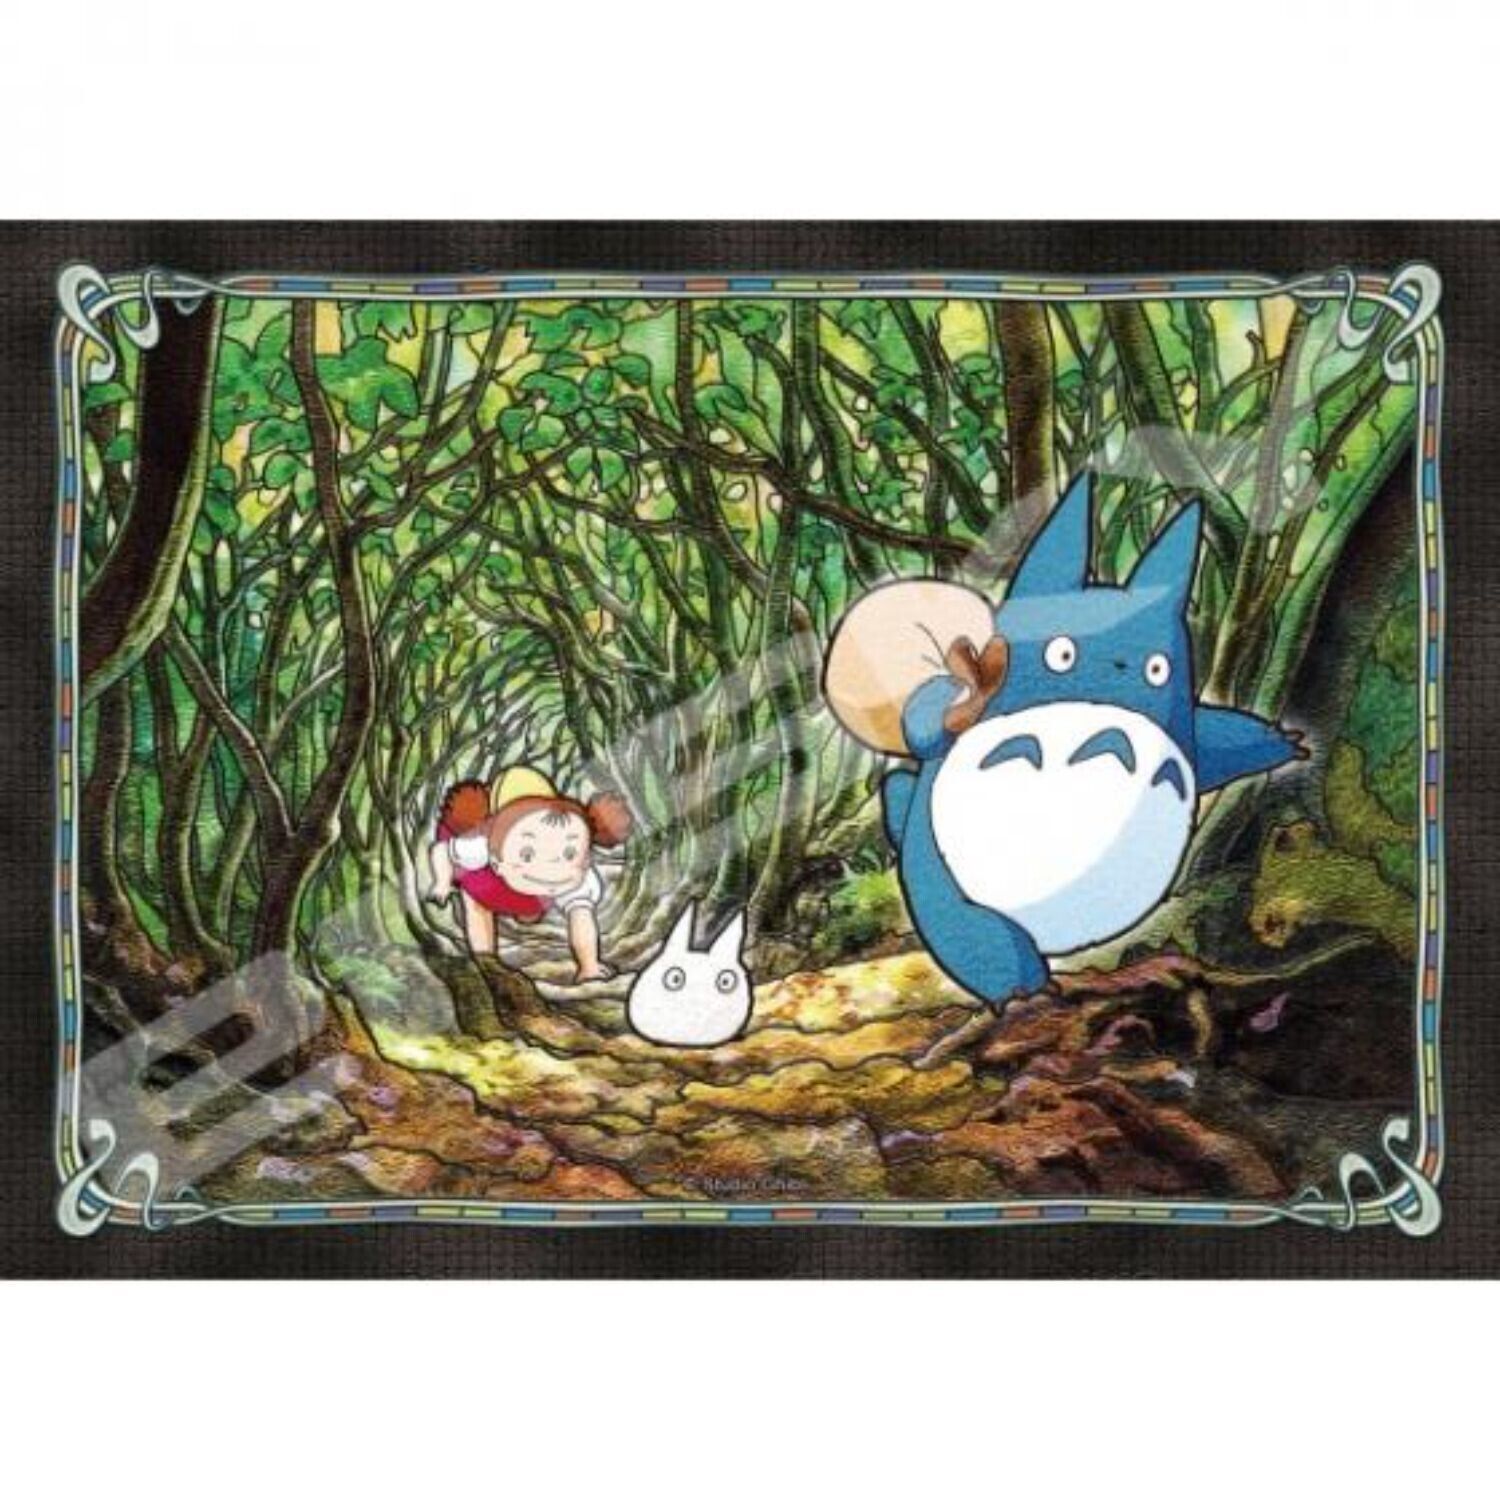 My Neighbor Totoro art crystal jigsaw puzzle (secret tunnel ) Studio Ghibli New